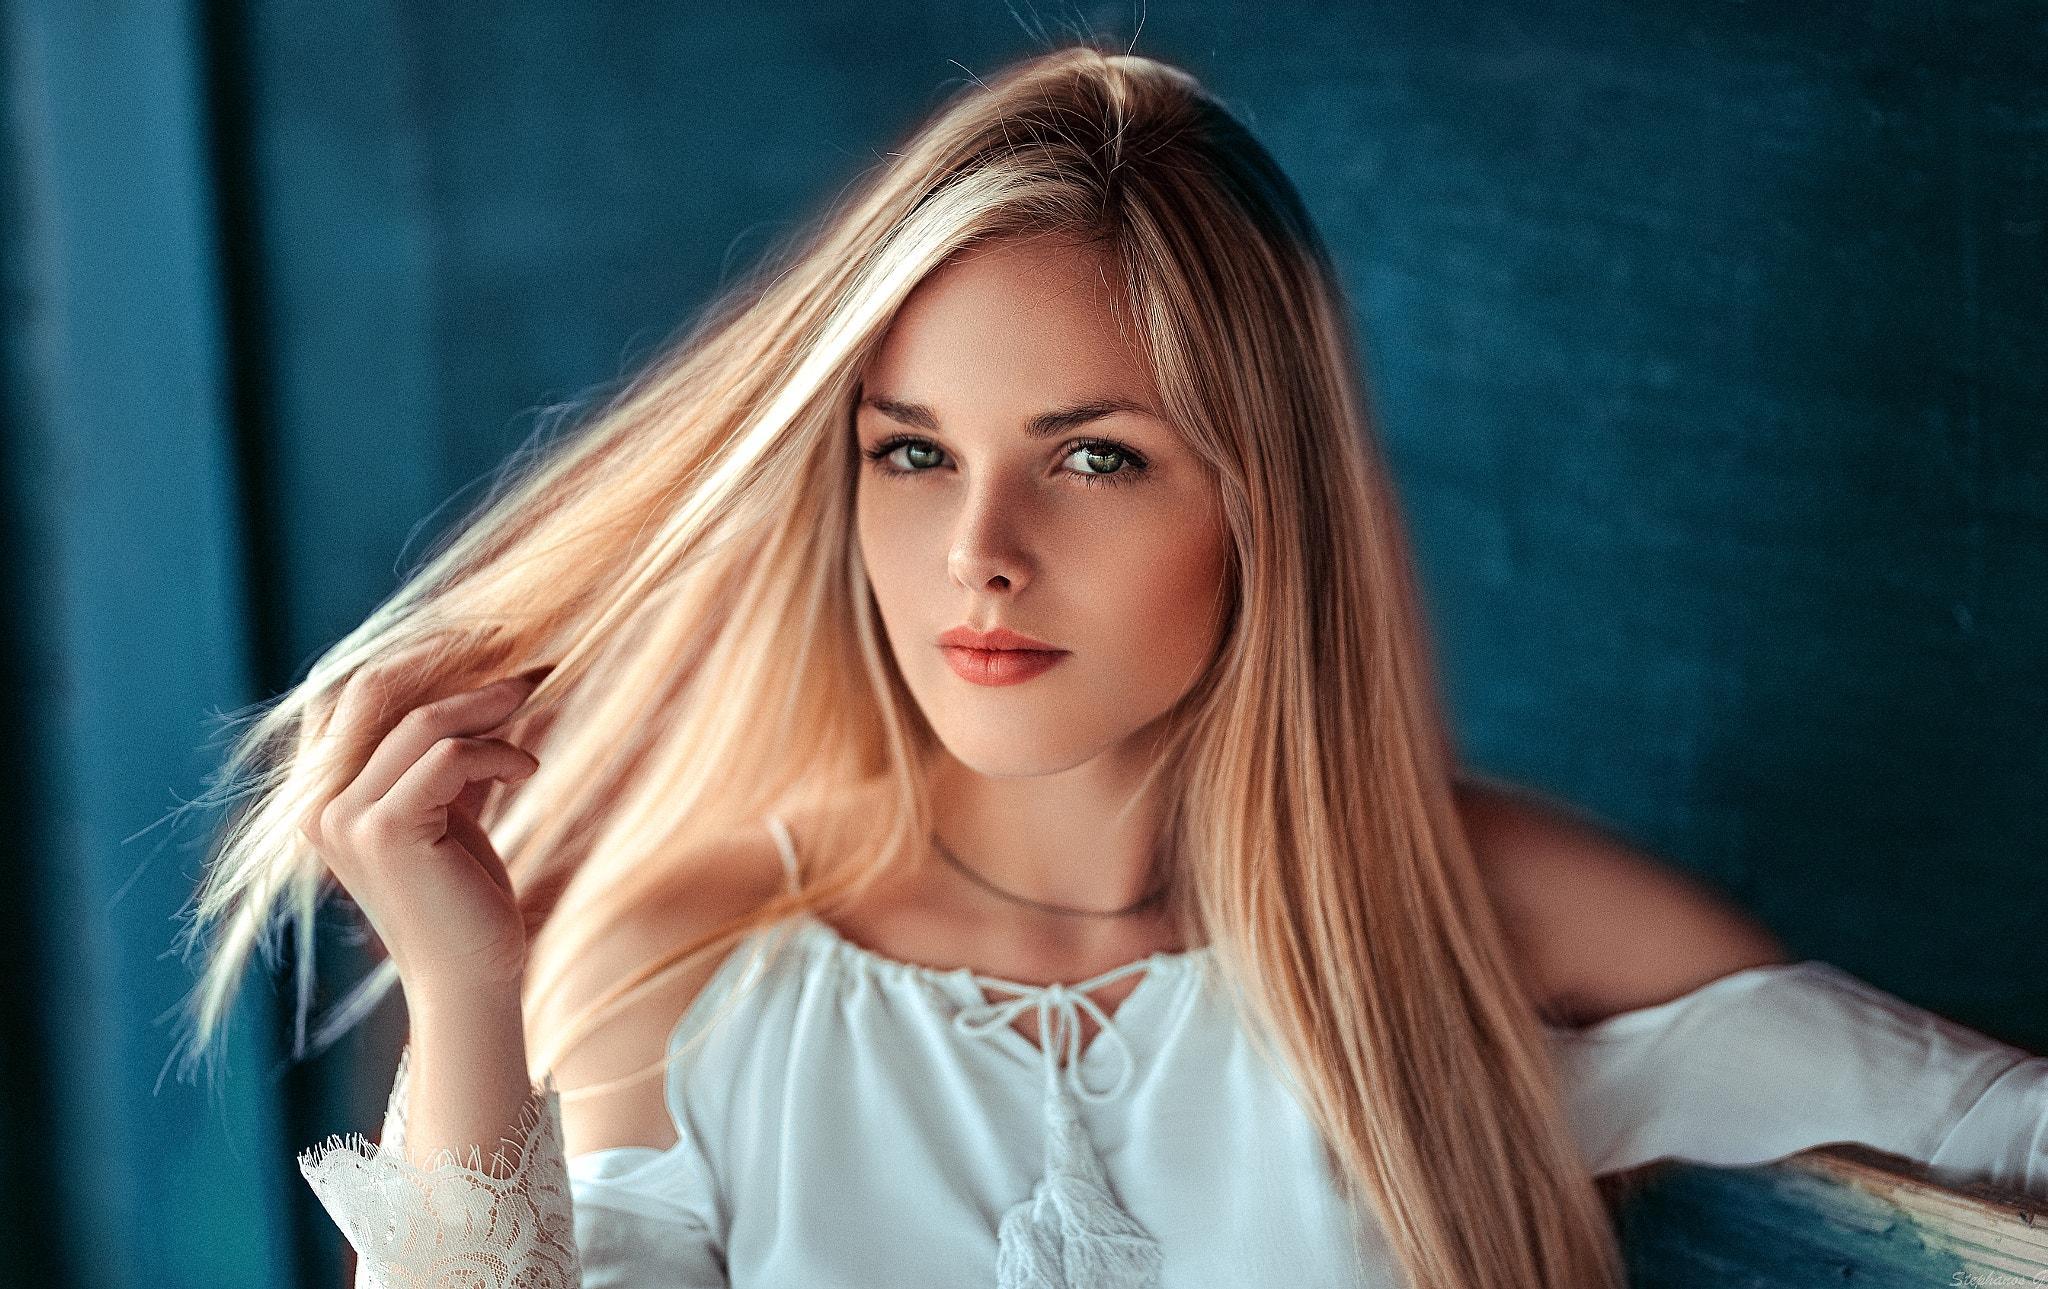 Blonde Hair Girl Wallpapers Top Free Blonde Hair Girl Backgrounds